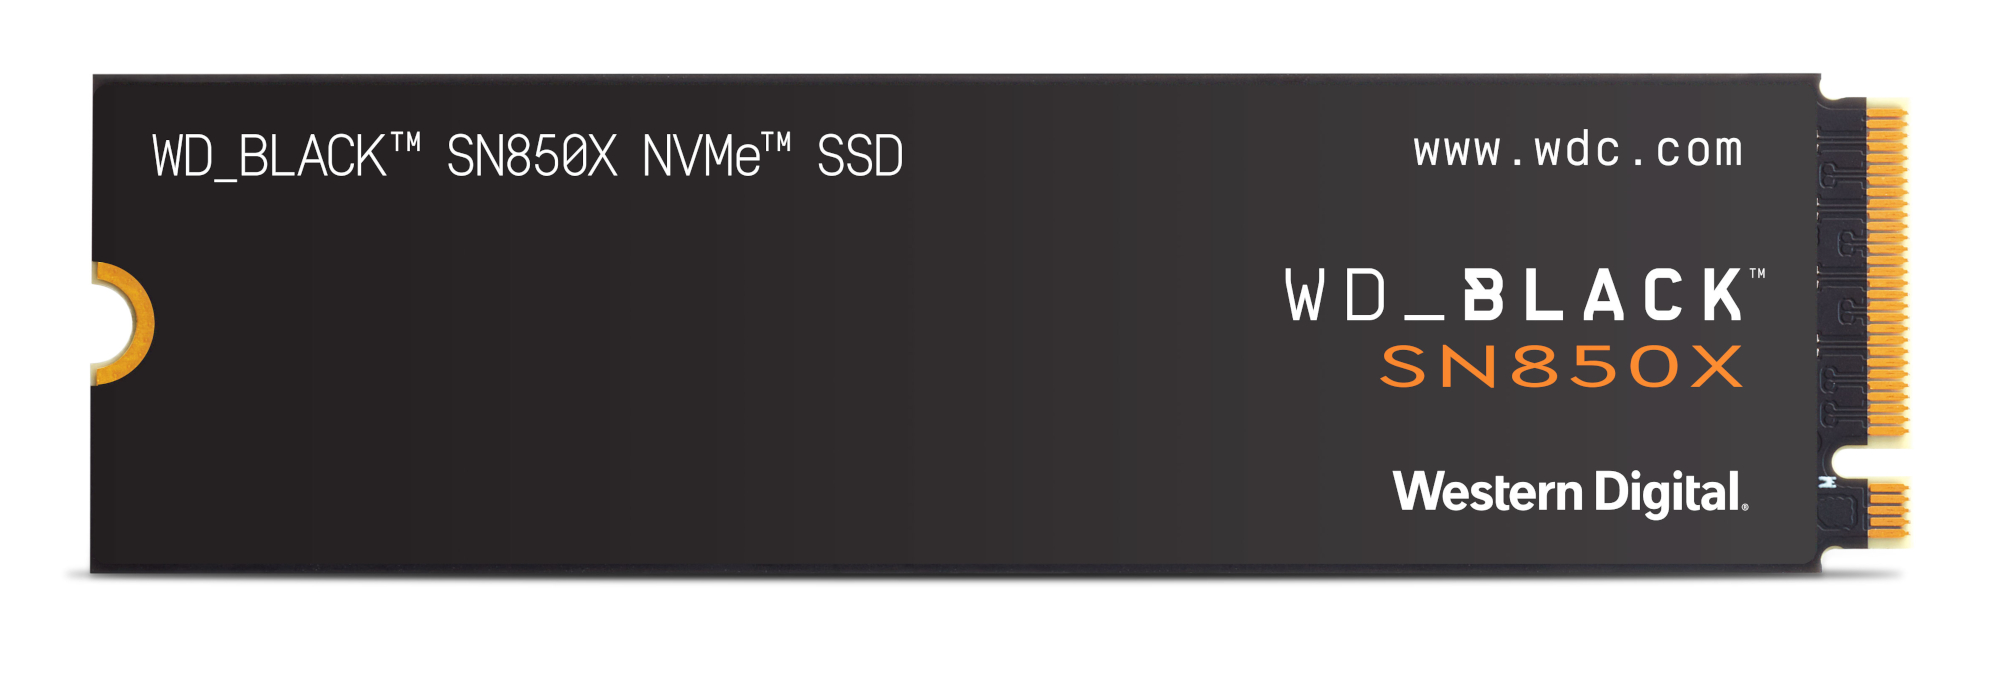 WD Black SN580X - Best PCIe 4.0 SSD runner-up